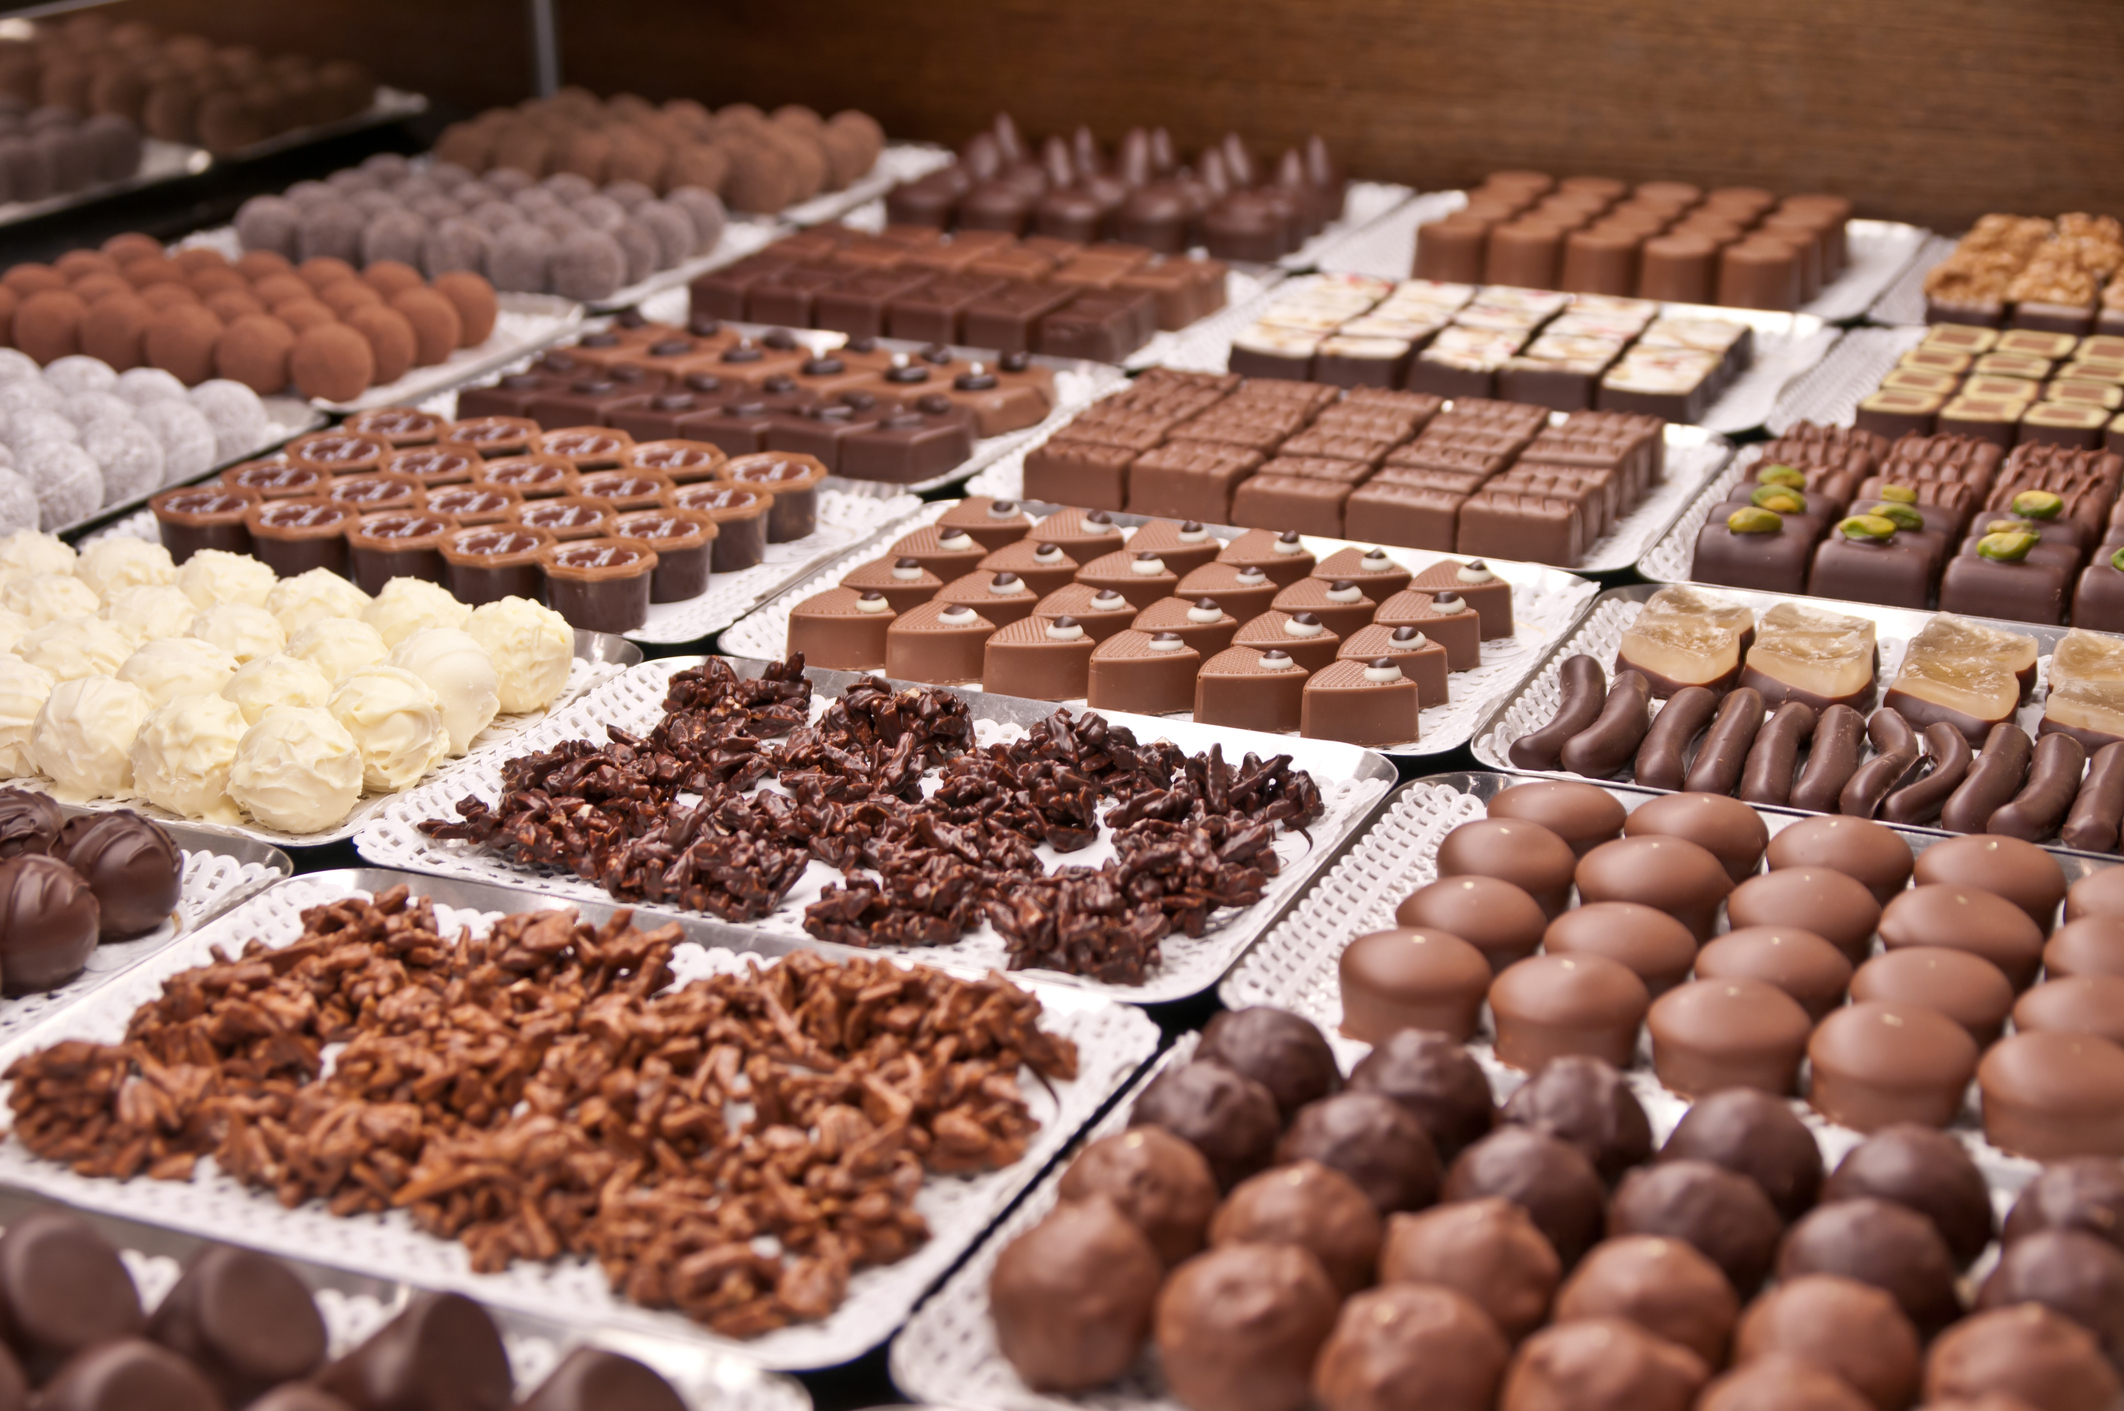 Trays of chocolate treats